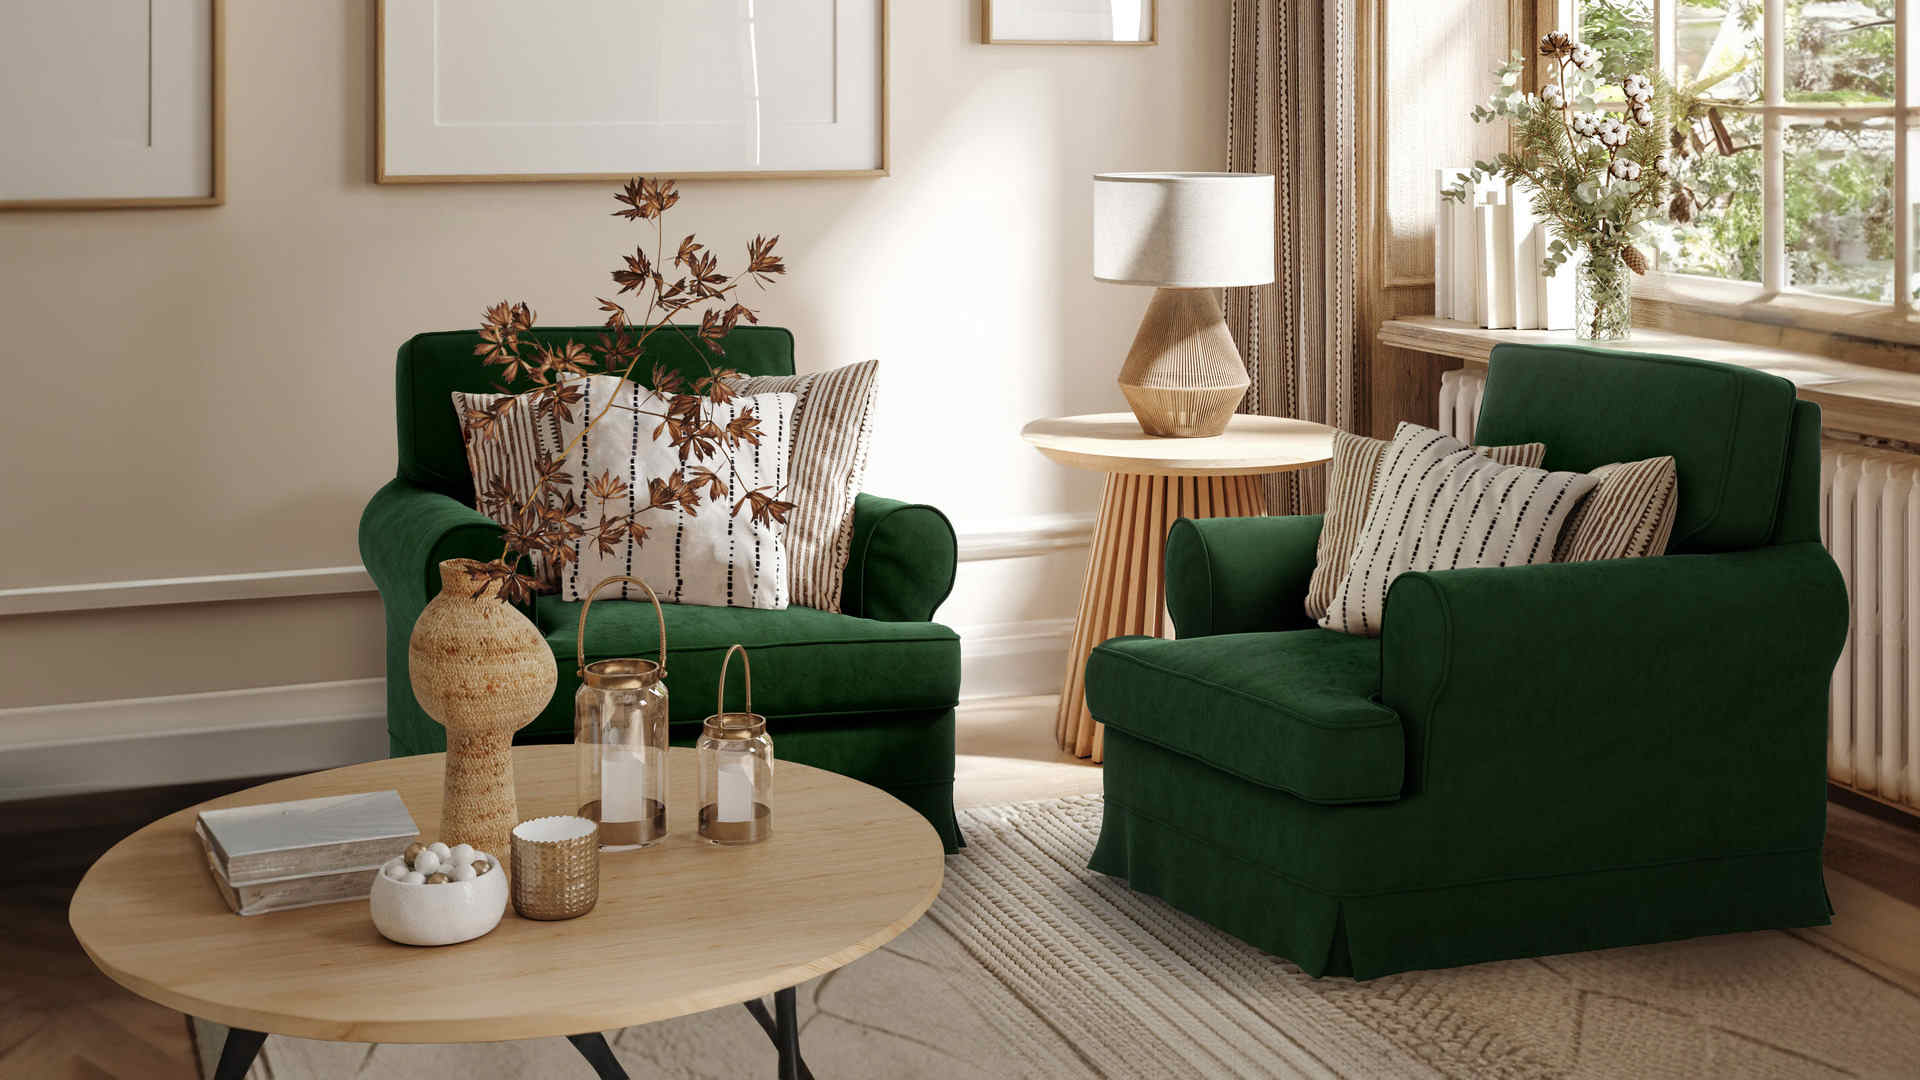 Woven Bottle Green Lounge CHAIR, Fashionable, Poltrona Scandinava, Mid  Century, Vintage, Retro Chair, Classic, Elgance 